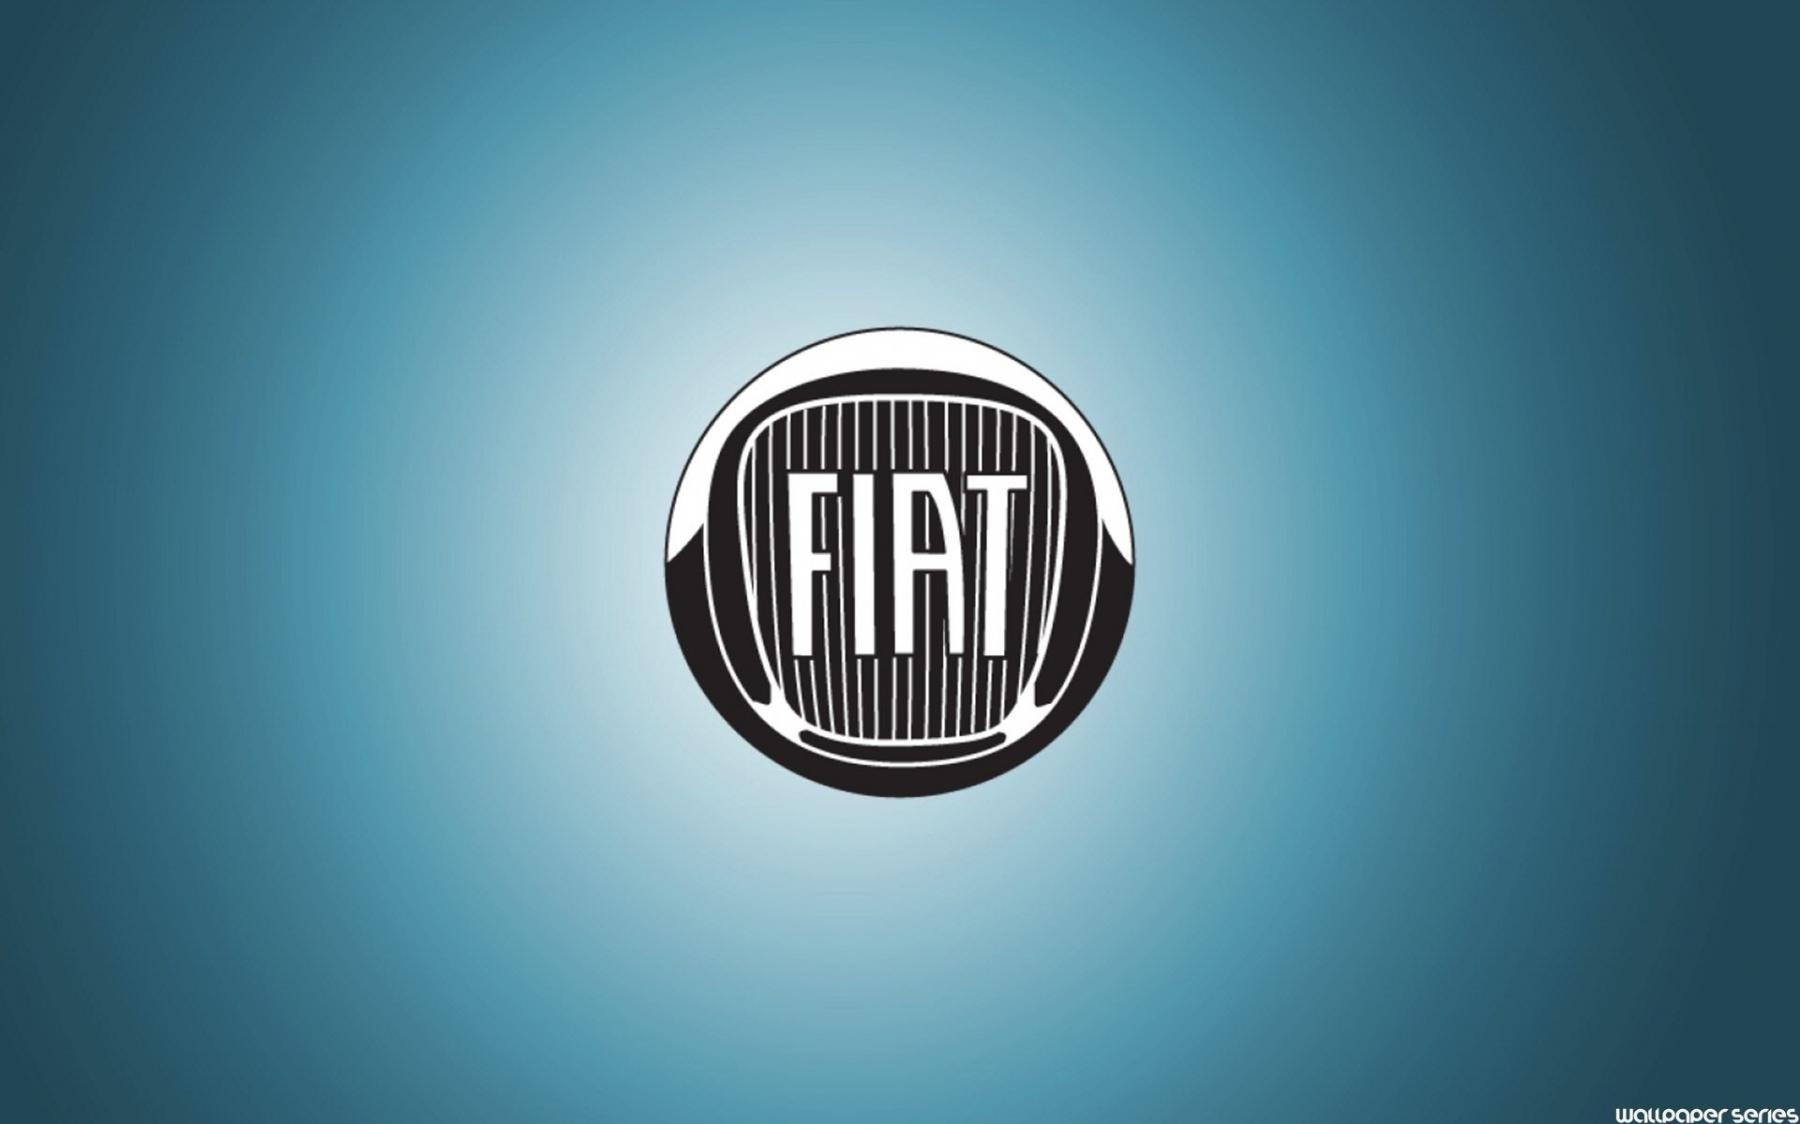 Fiat logo - 3D model by 3dcaddesignwork on Thangs